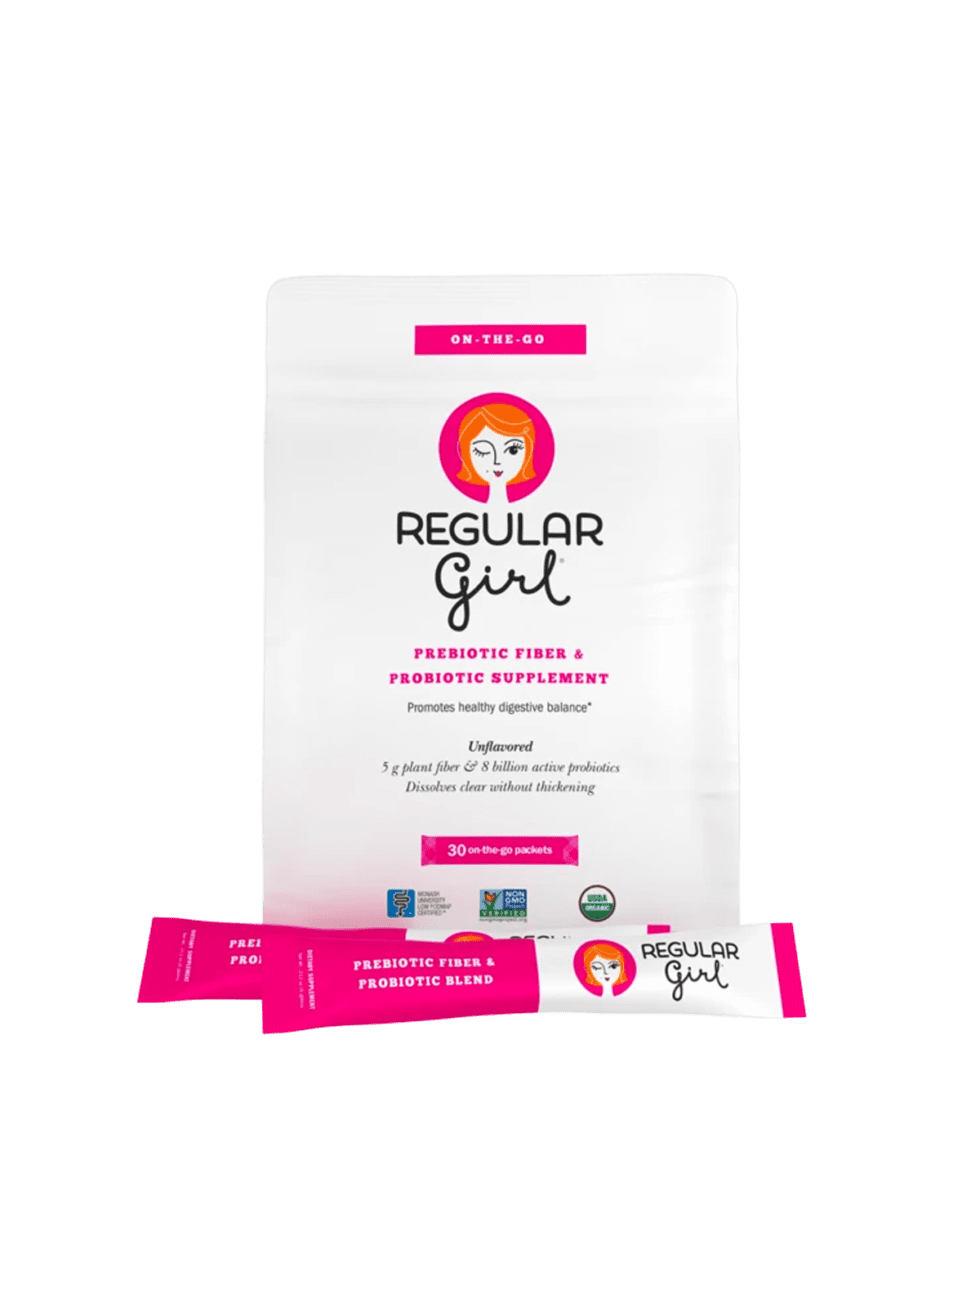 Regular Girl Prebiotic Fiber & Prebiotic Supplement